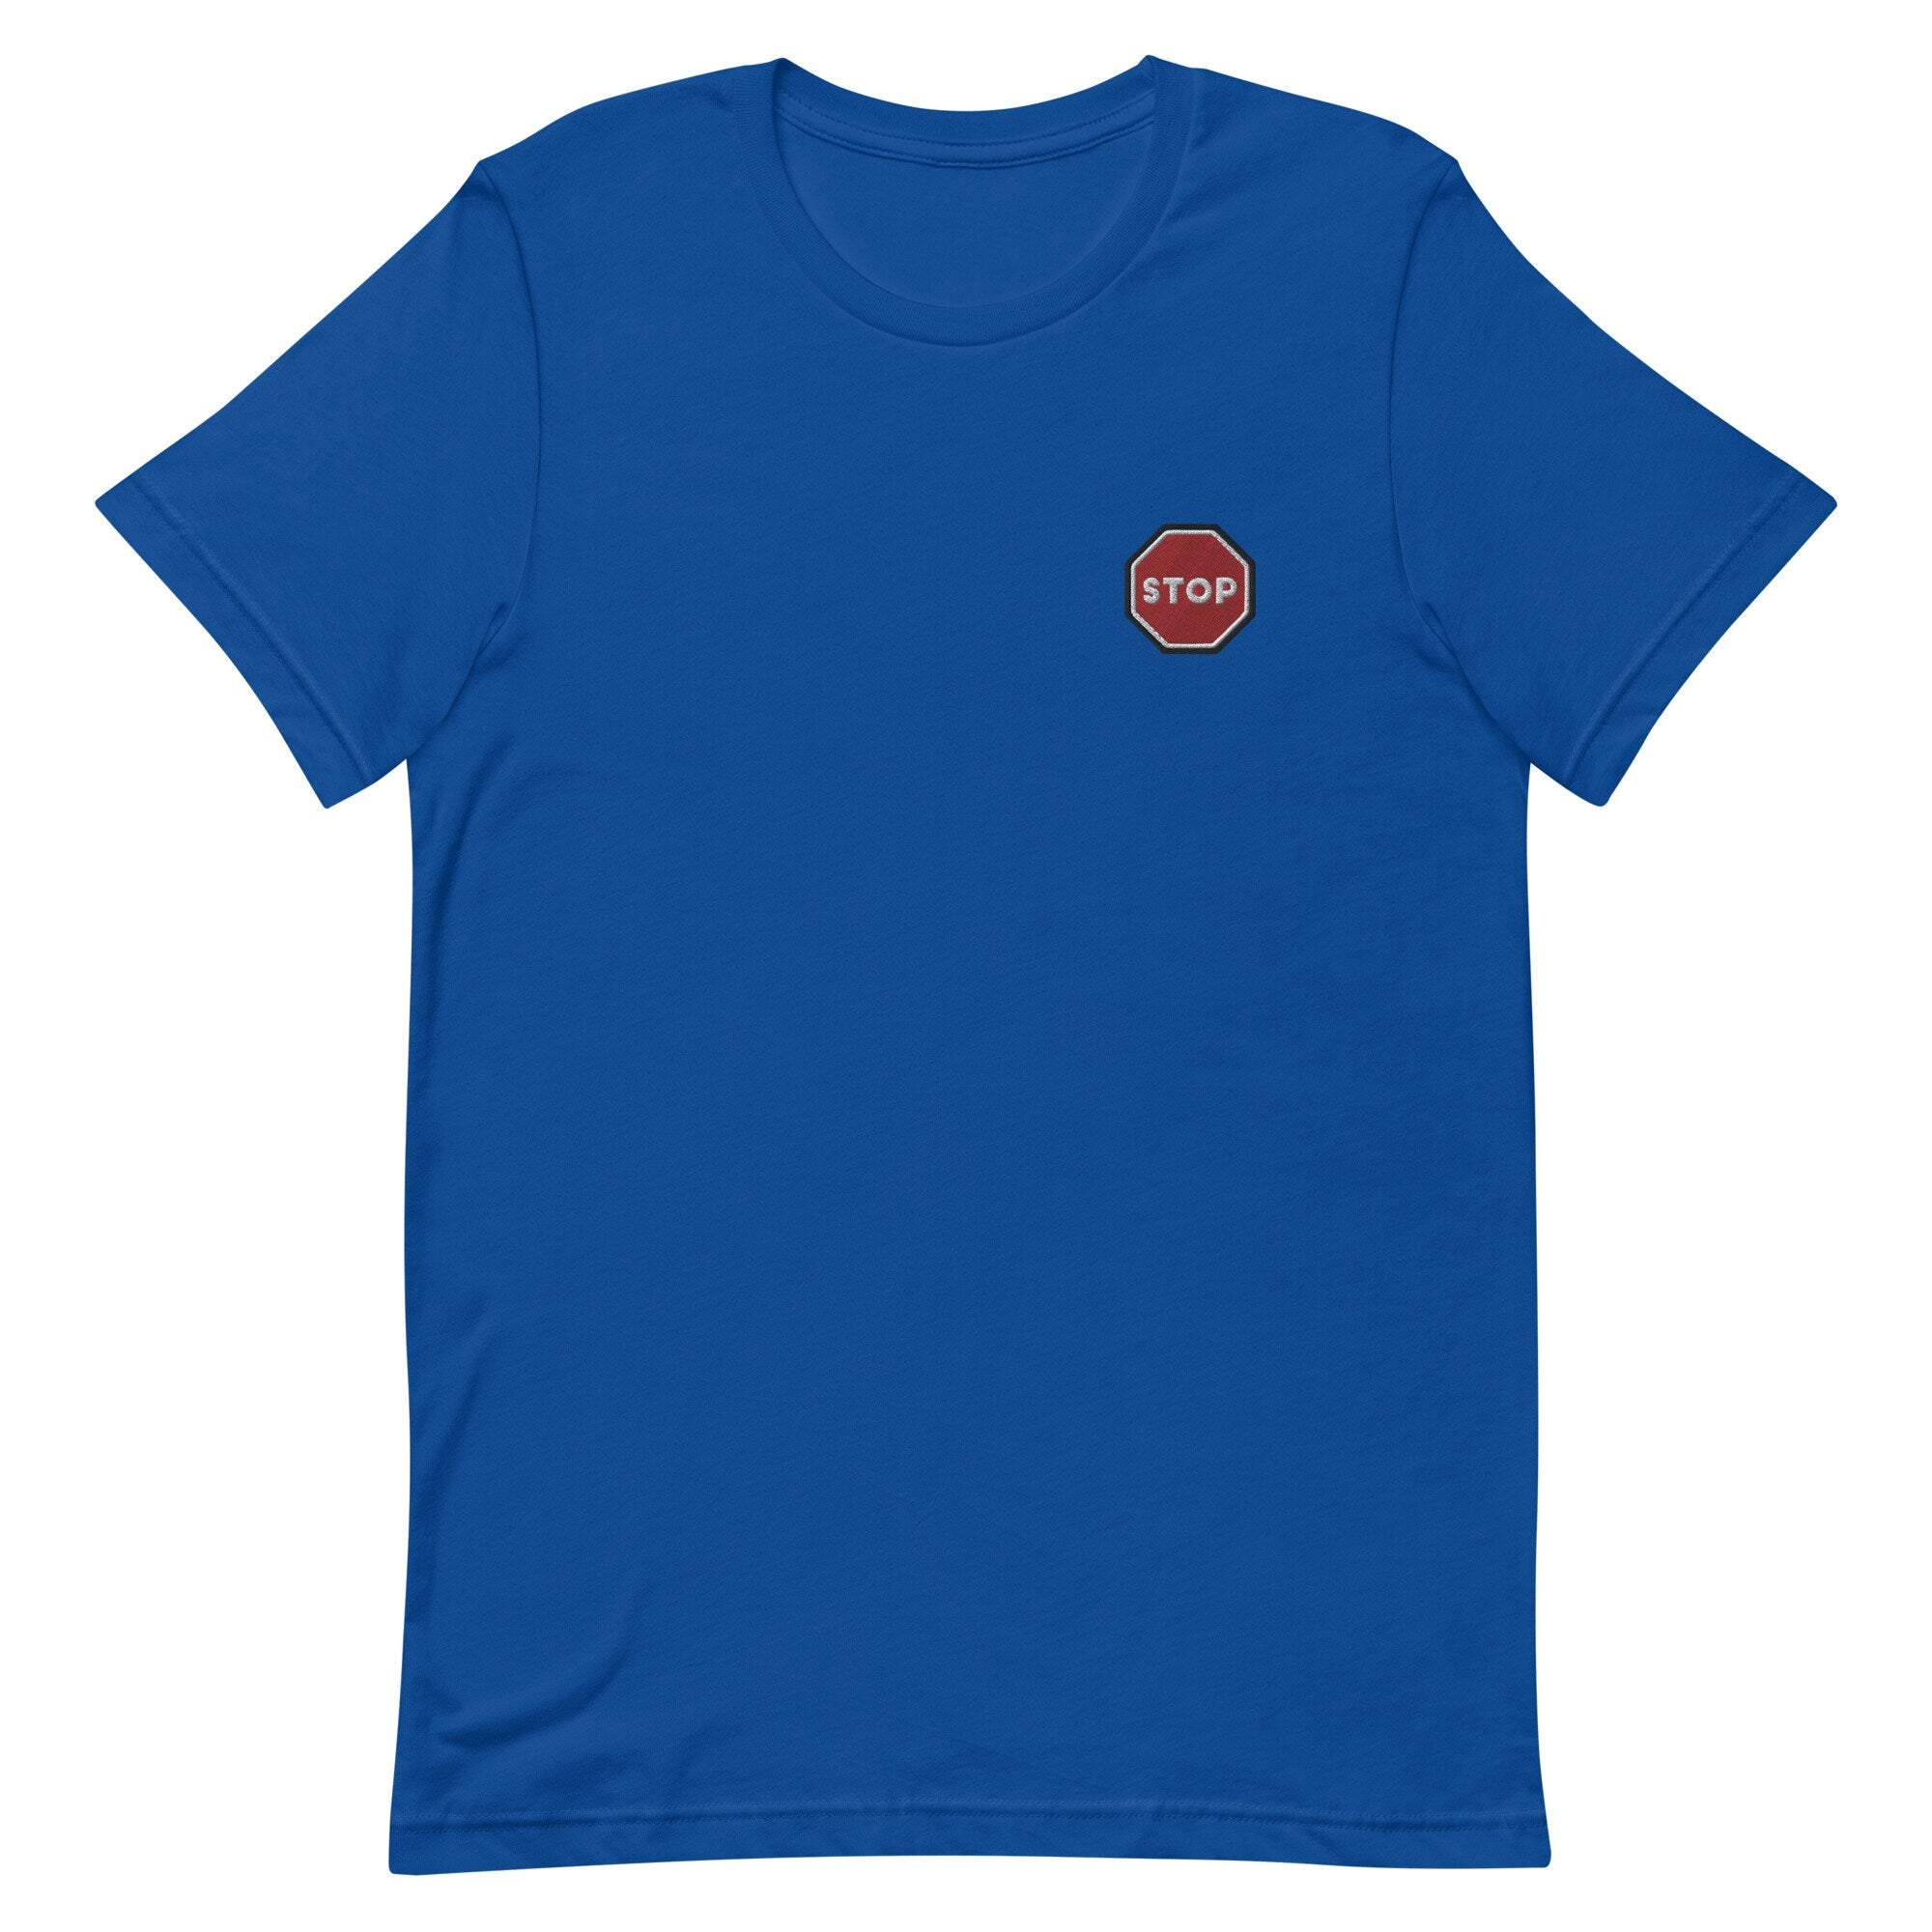 Stop SIgn Premium Men's T-Shirt, Embroidered Men's T-Shirt Gift for Boyfriend, Men's Short Sleeve Shirt - Multiple Colors